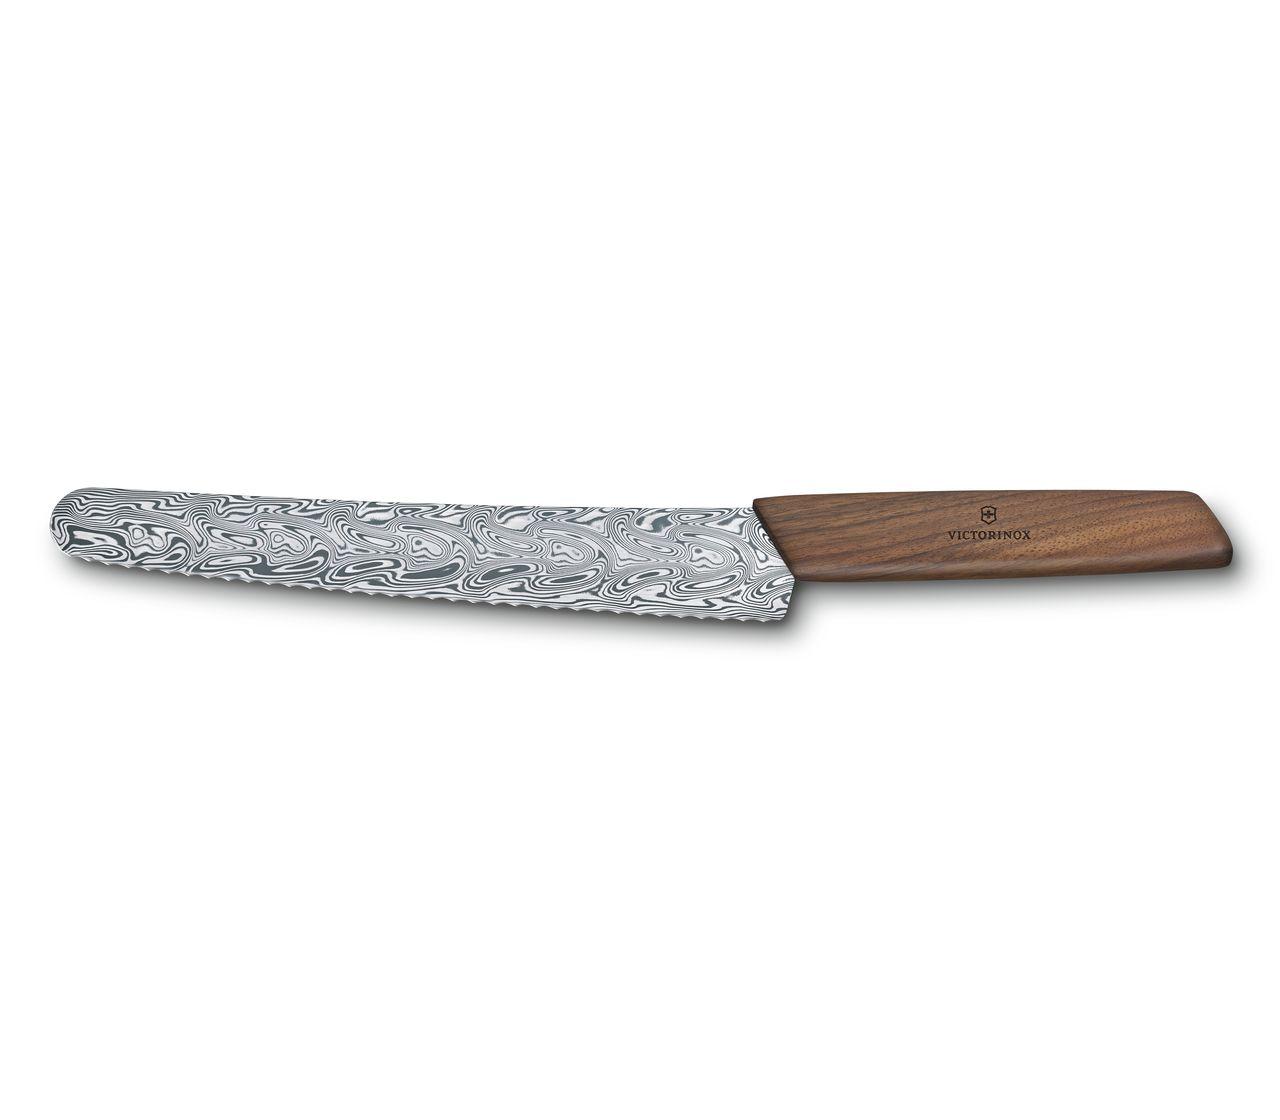 Victorinox Swiss Modern two-piece knife set, bread knife and santoku